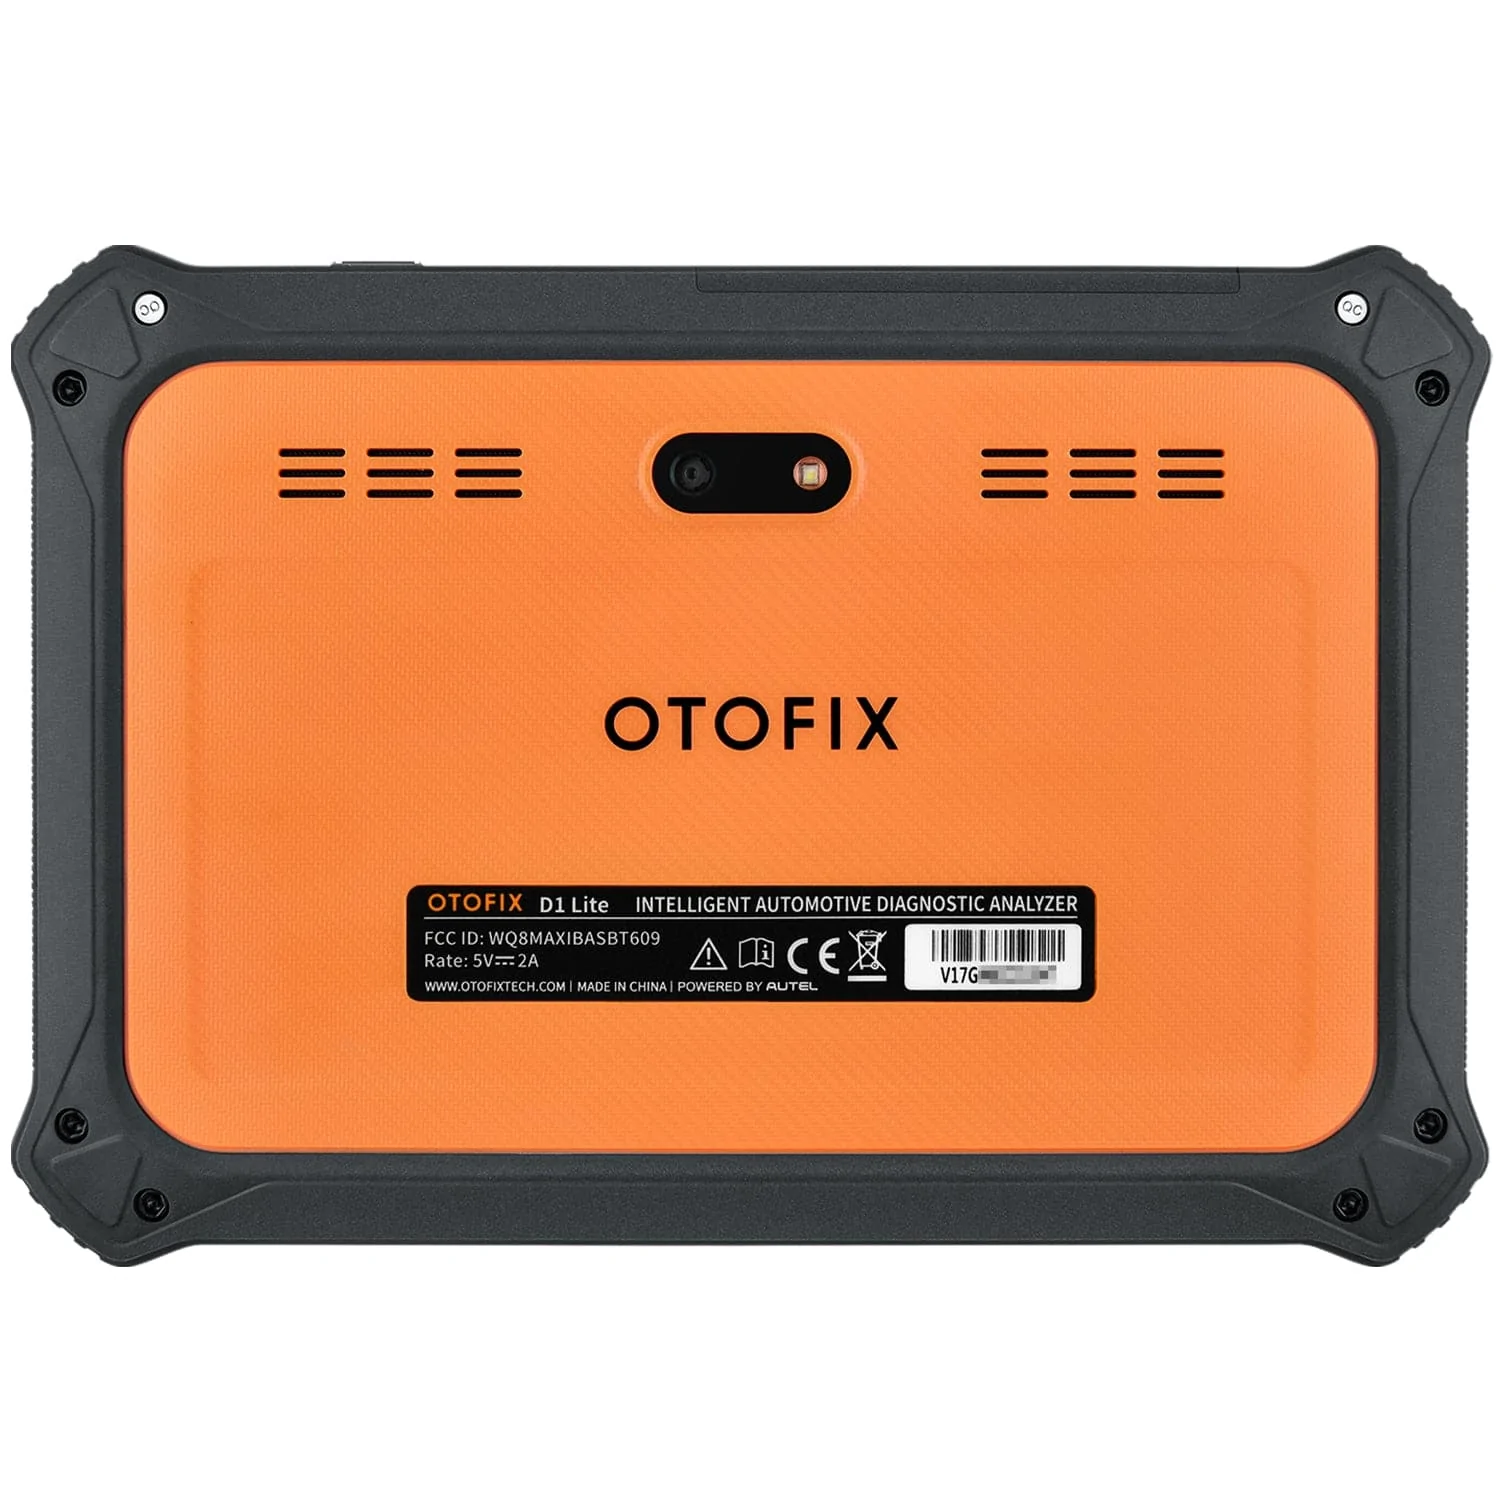 Autel OTOFIX D1 Lite Car Diagnostic Scan Tool with AutoVIN, All System Diagnostics with 29 Service, Upgrade of Autel MK808BT/ MK808 OBD2 Scanner